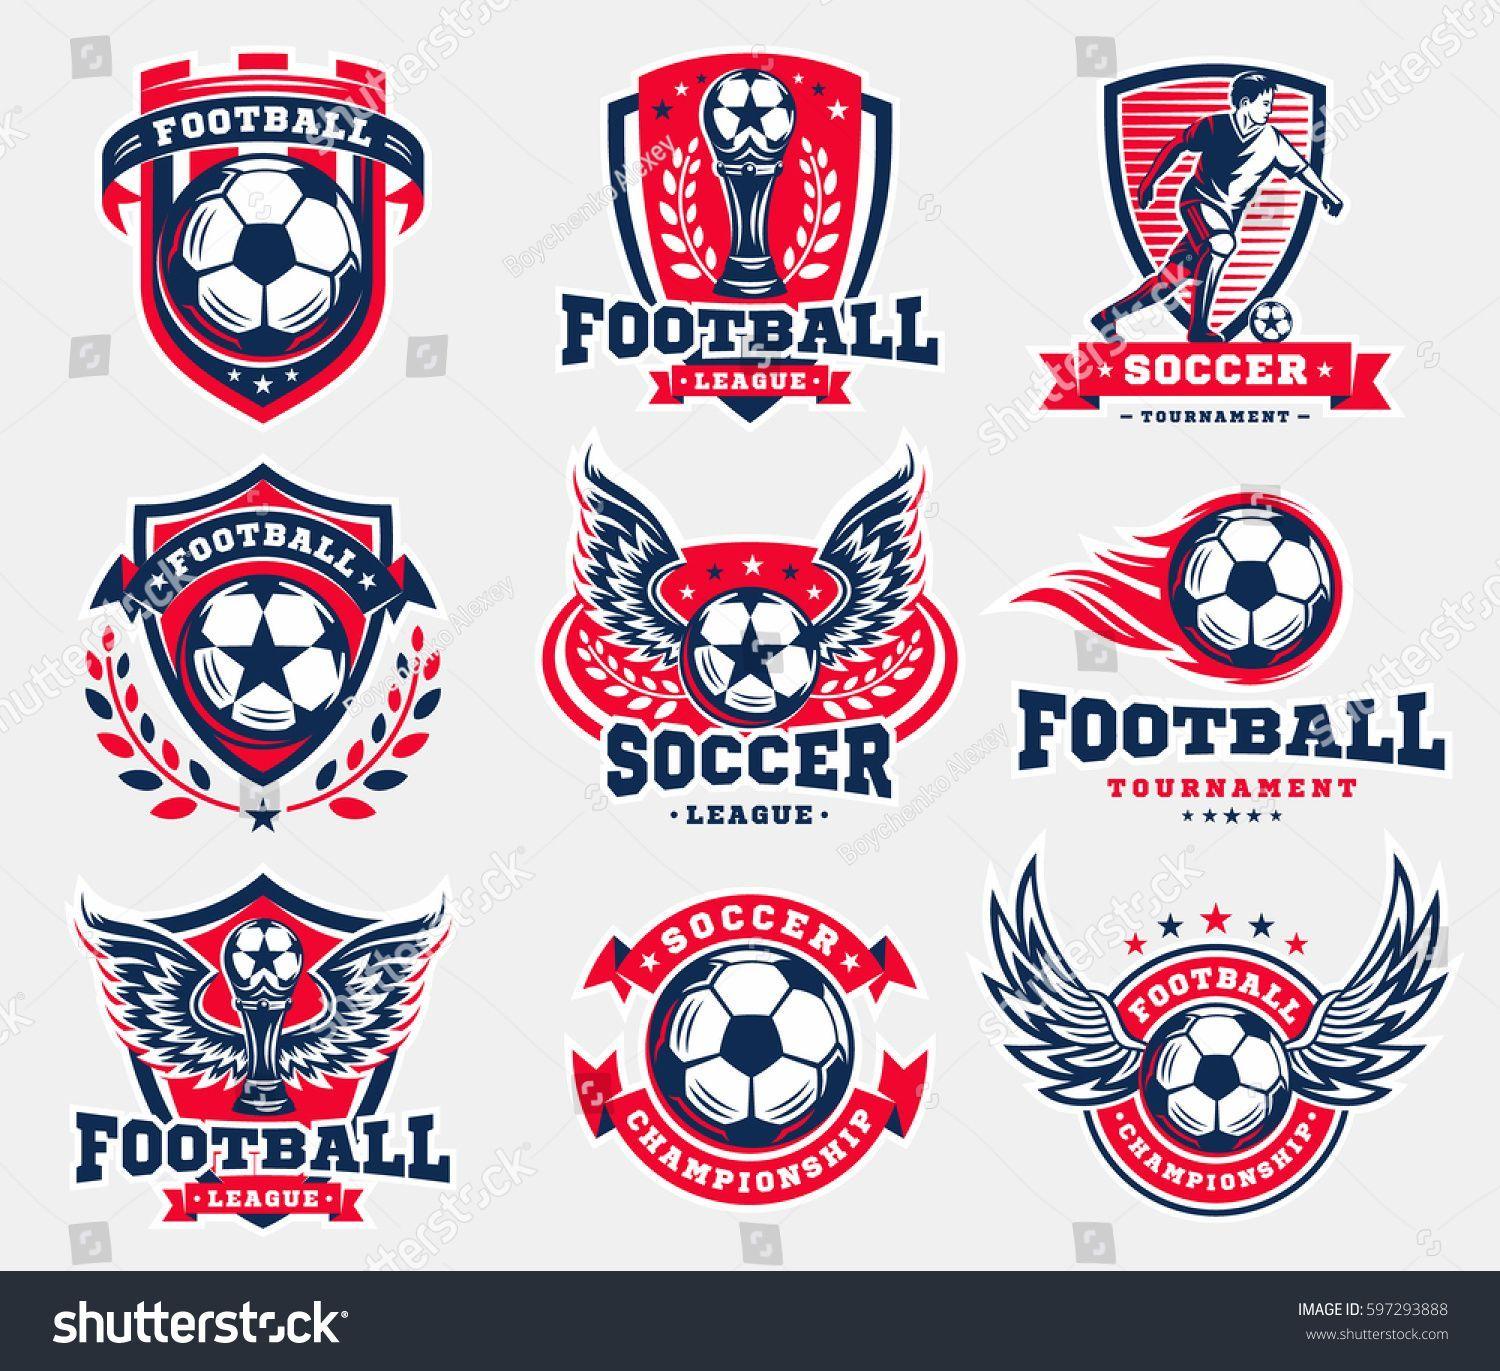 Football Logo - Soccer football logo, emblem collections, designs templates on a